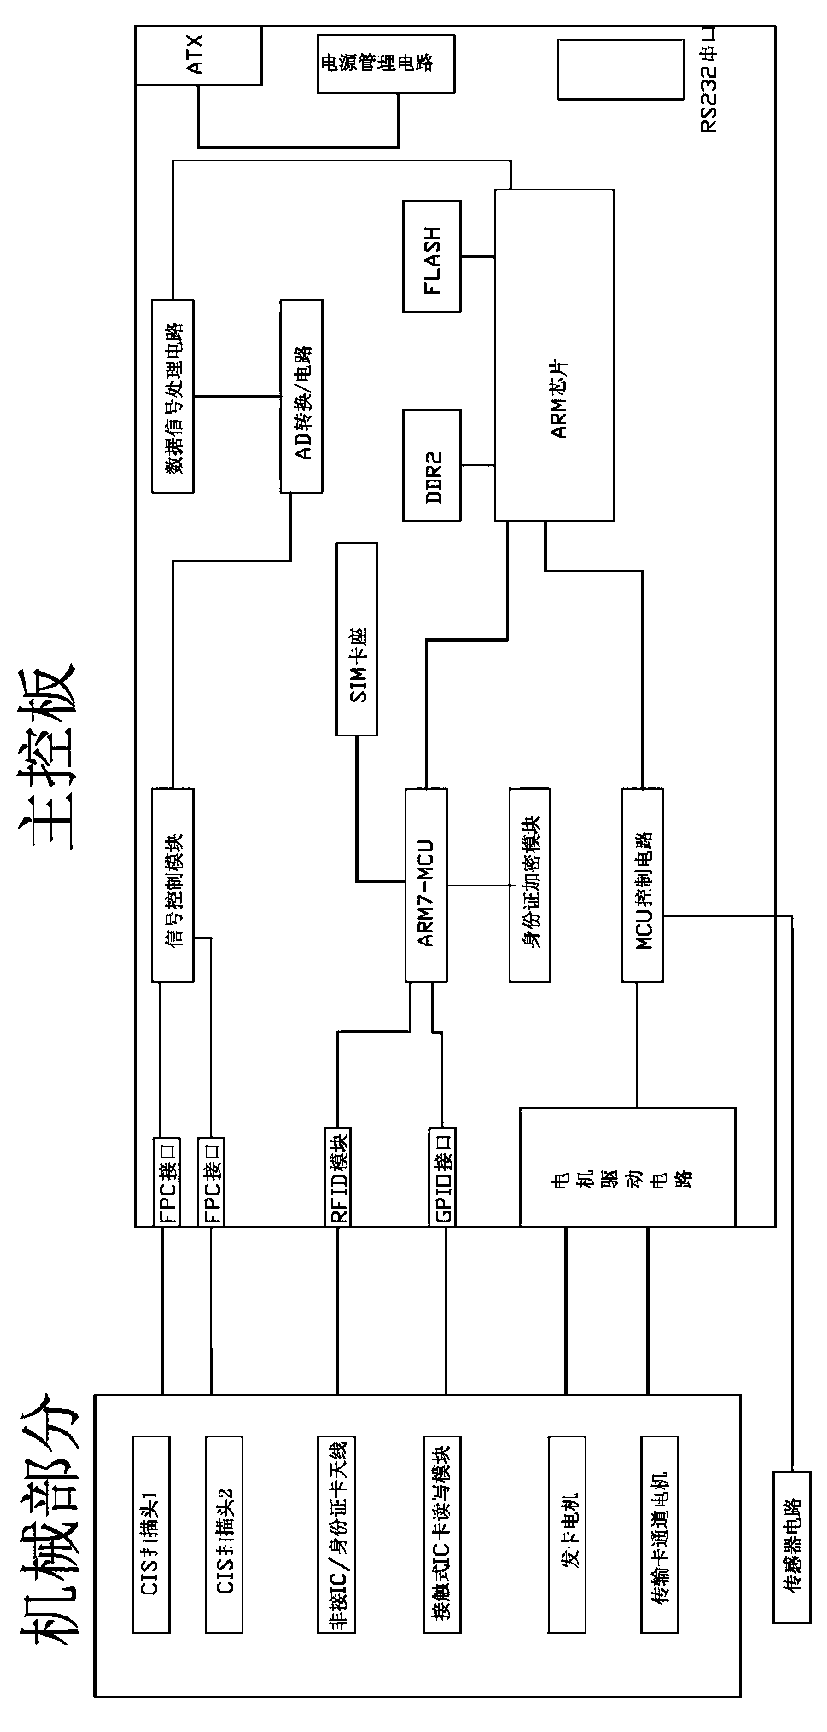 Car-distributing module of real-name integrated circuit (IC) card